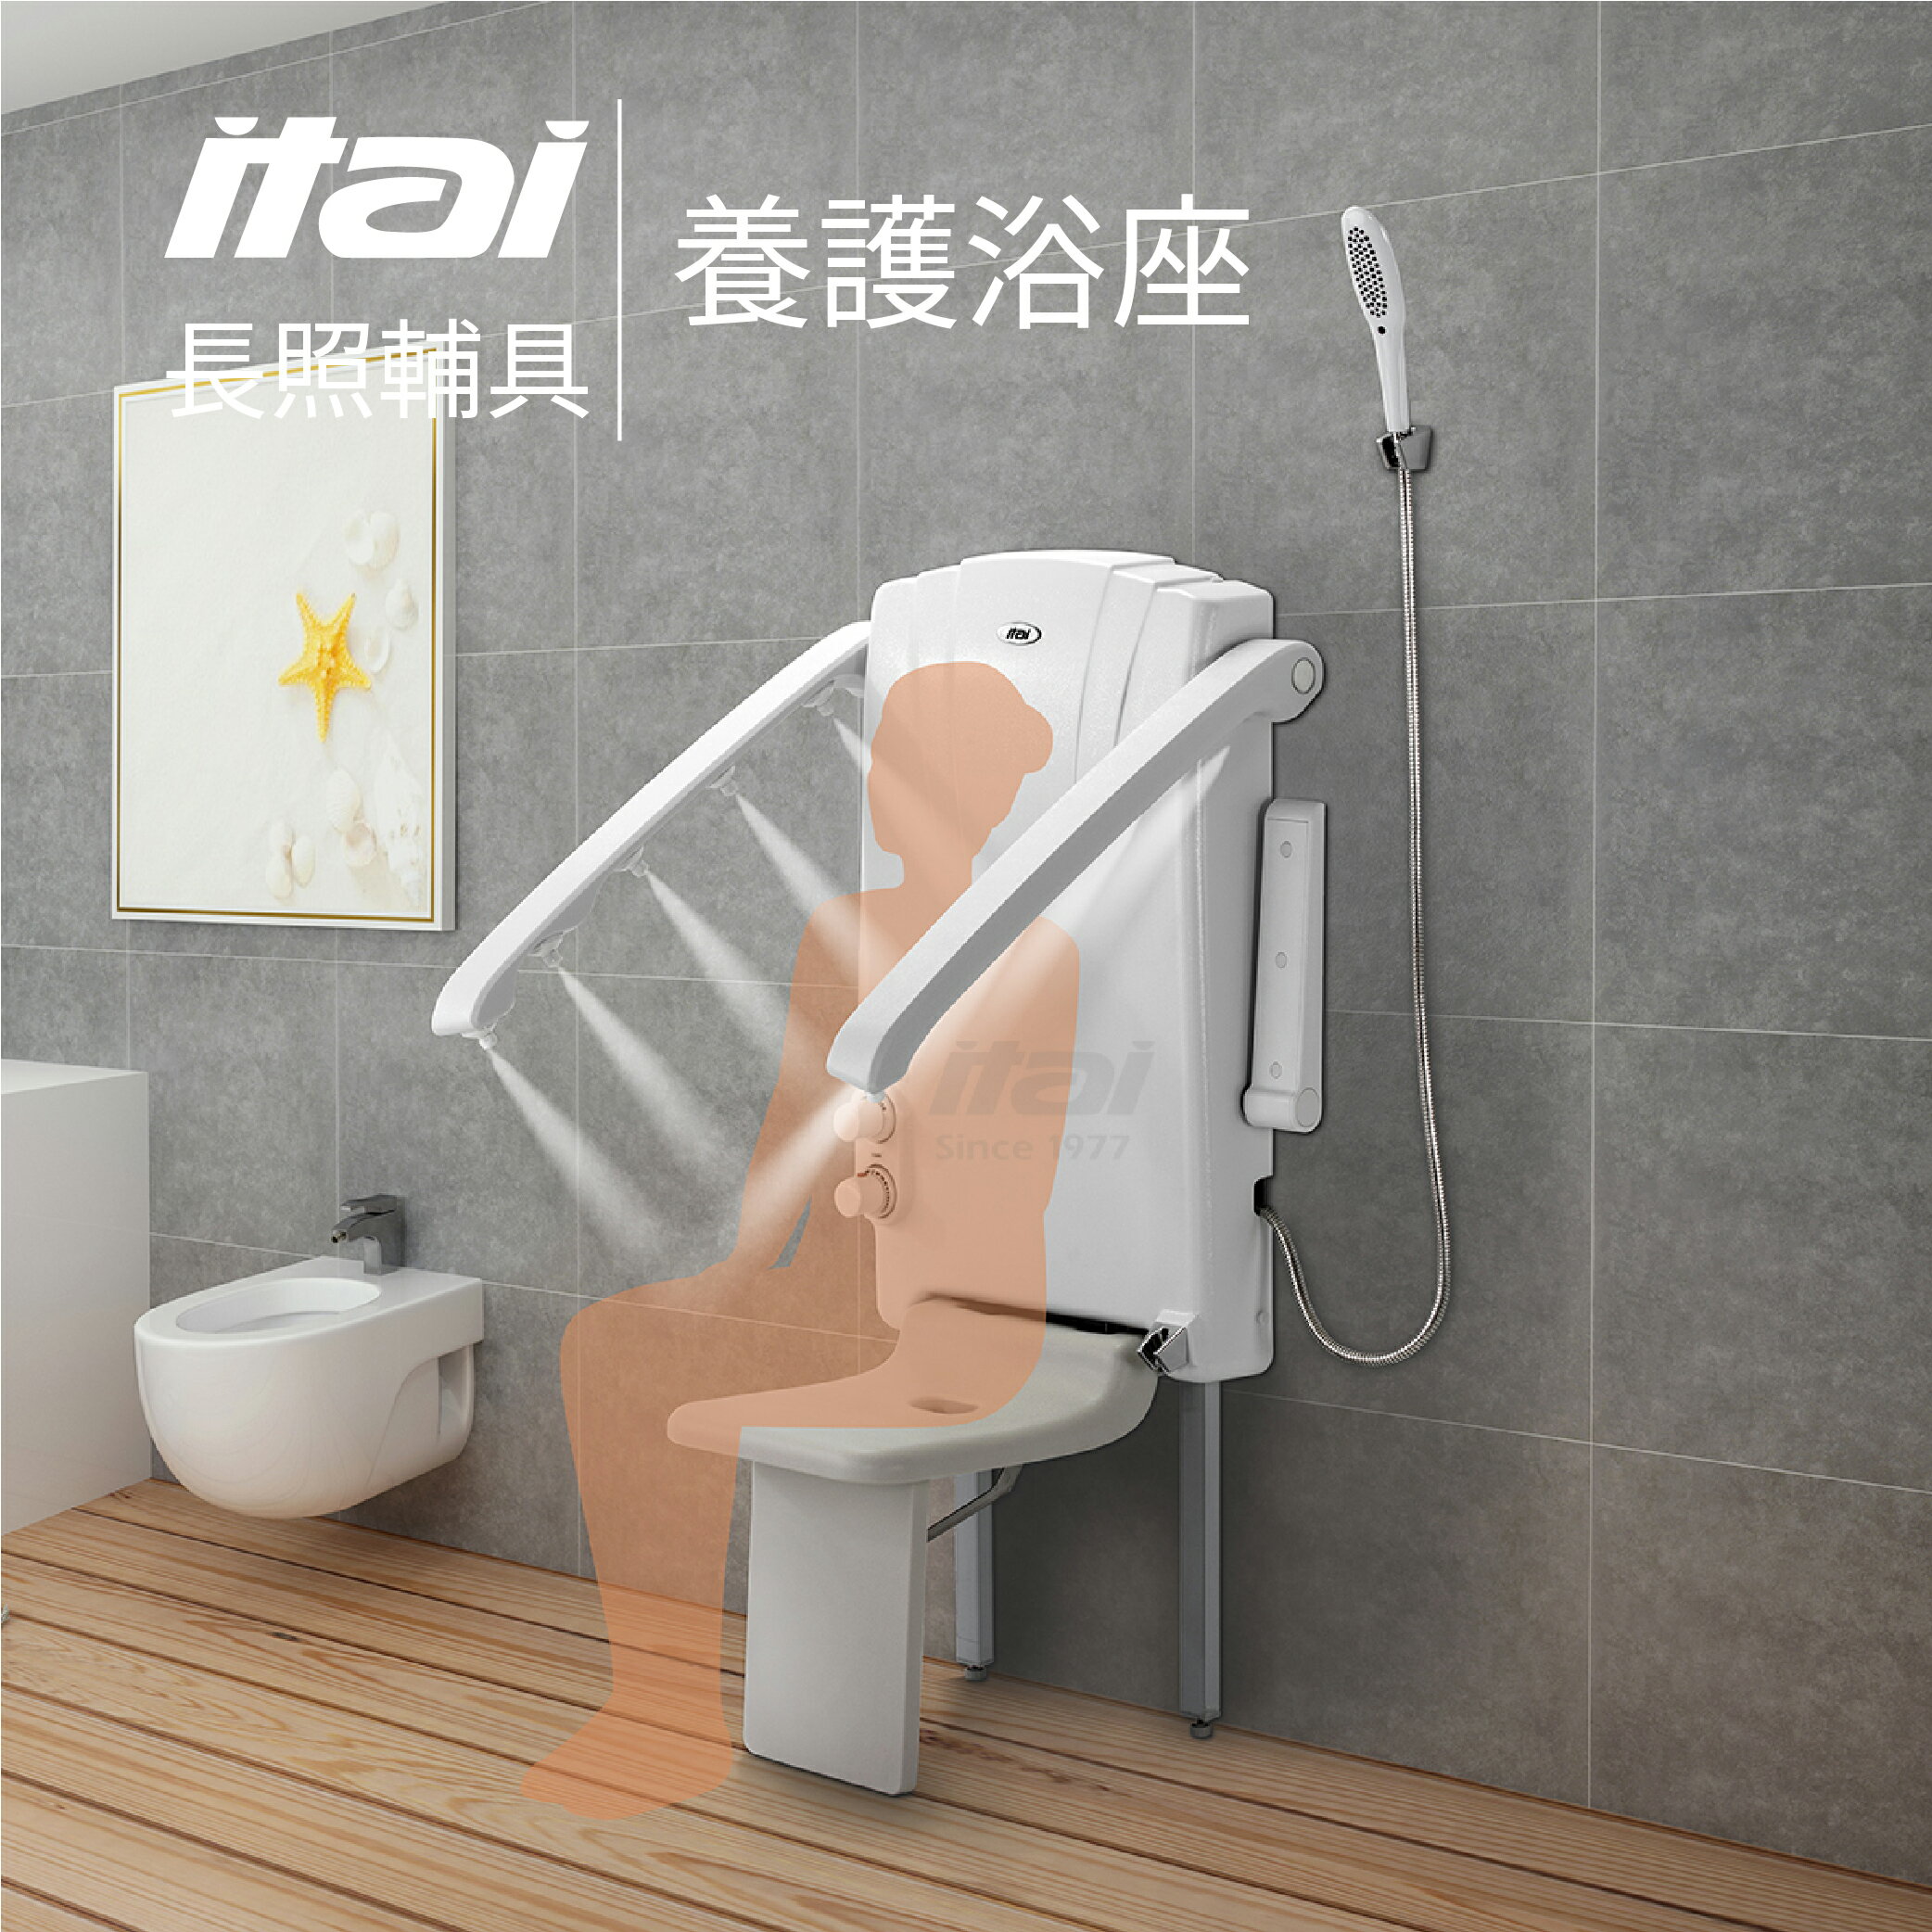 【ITAI 一太衛浴】養護浴座 ET-CB1101 輔具照護 長照 淋浴椅 衛浴 居家安全 防撞 防摔 安全